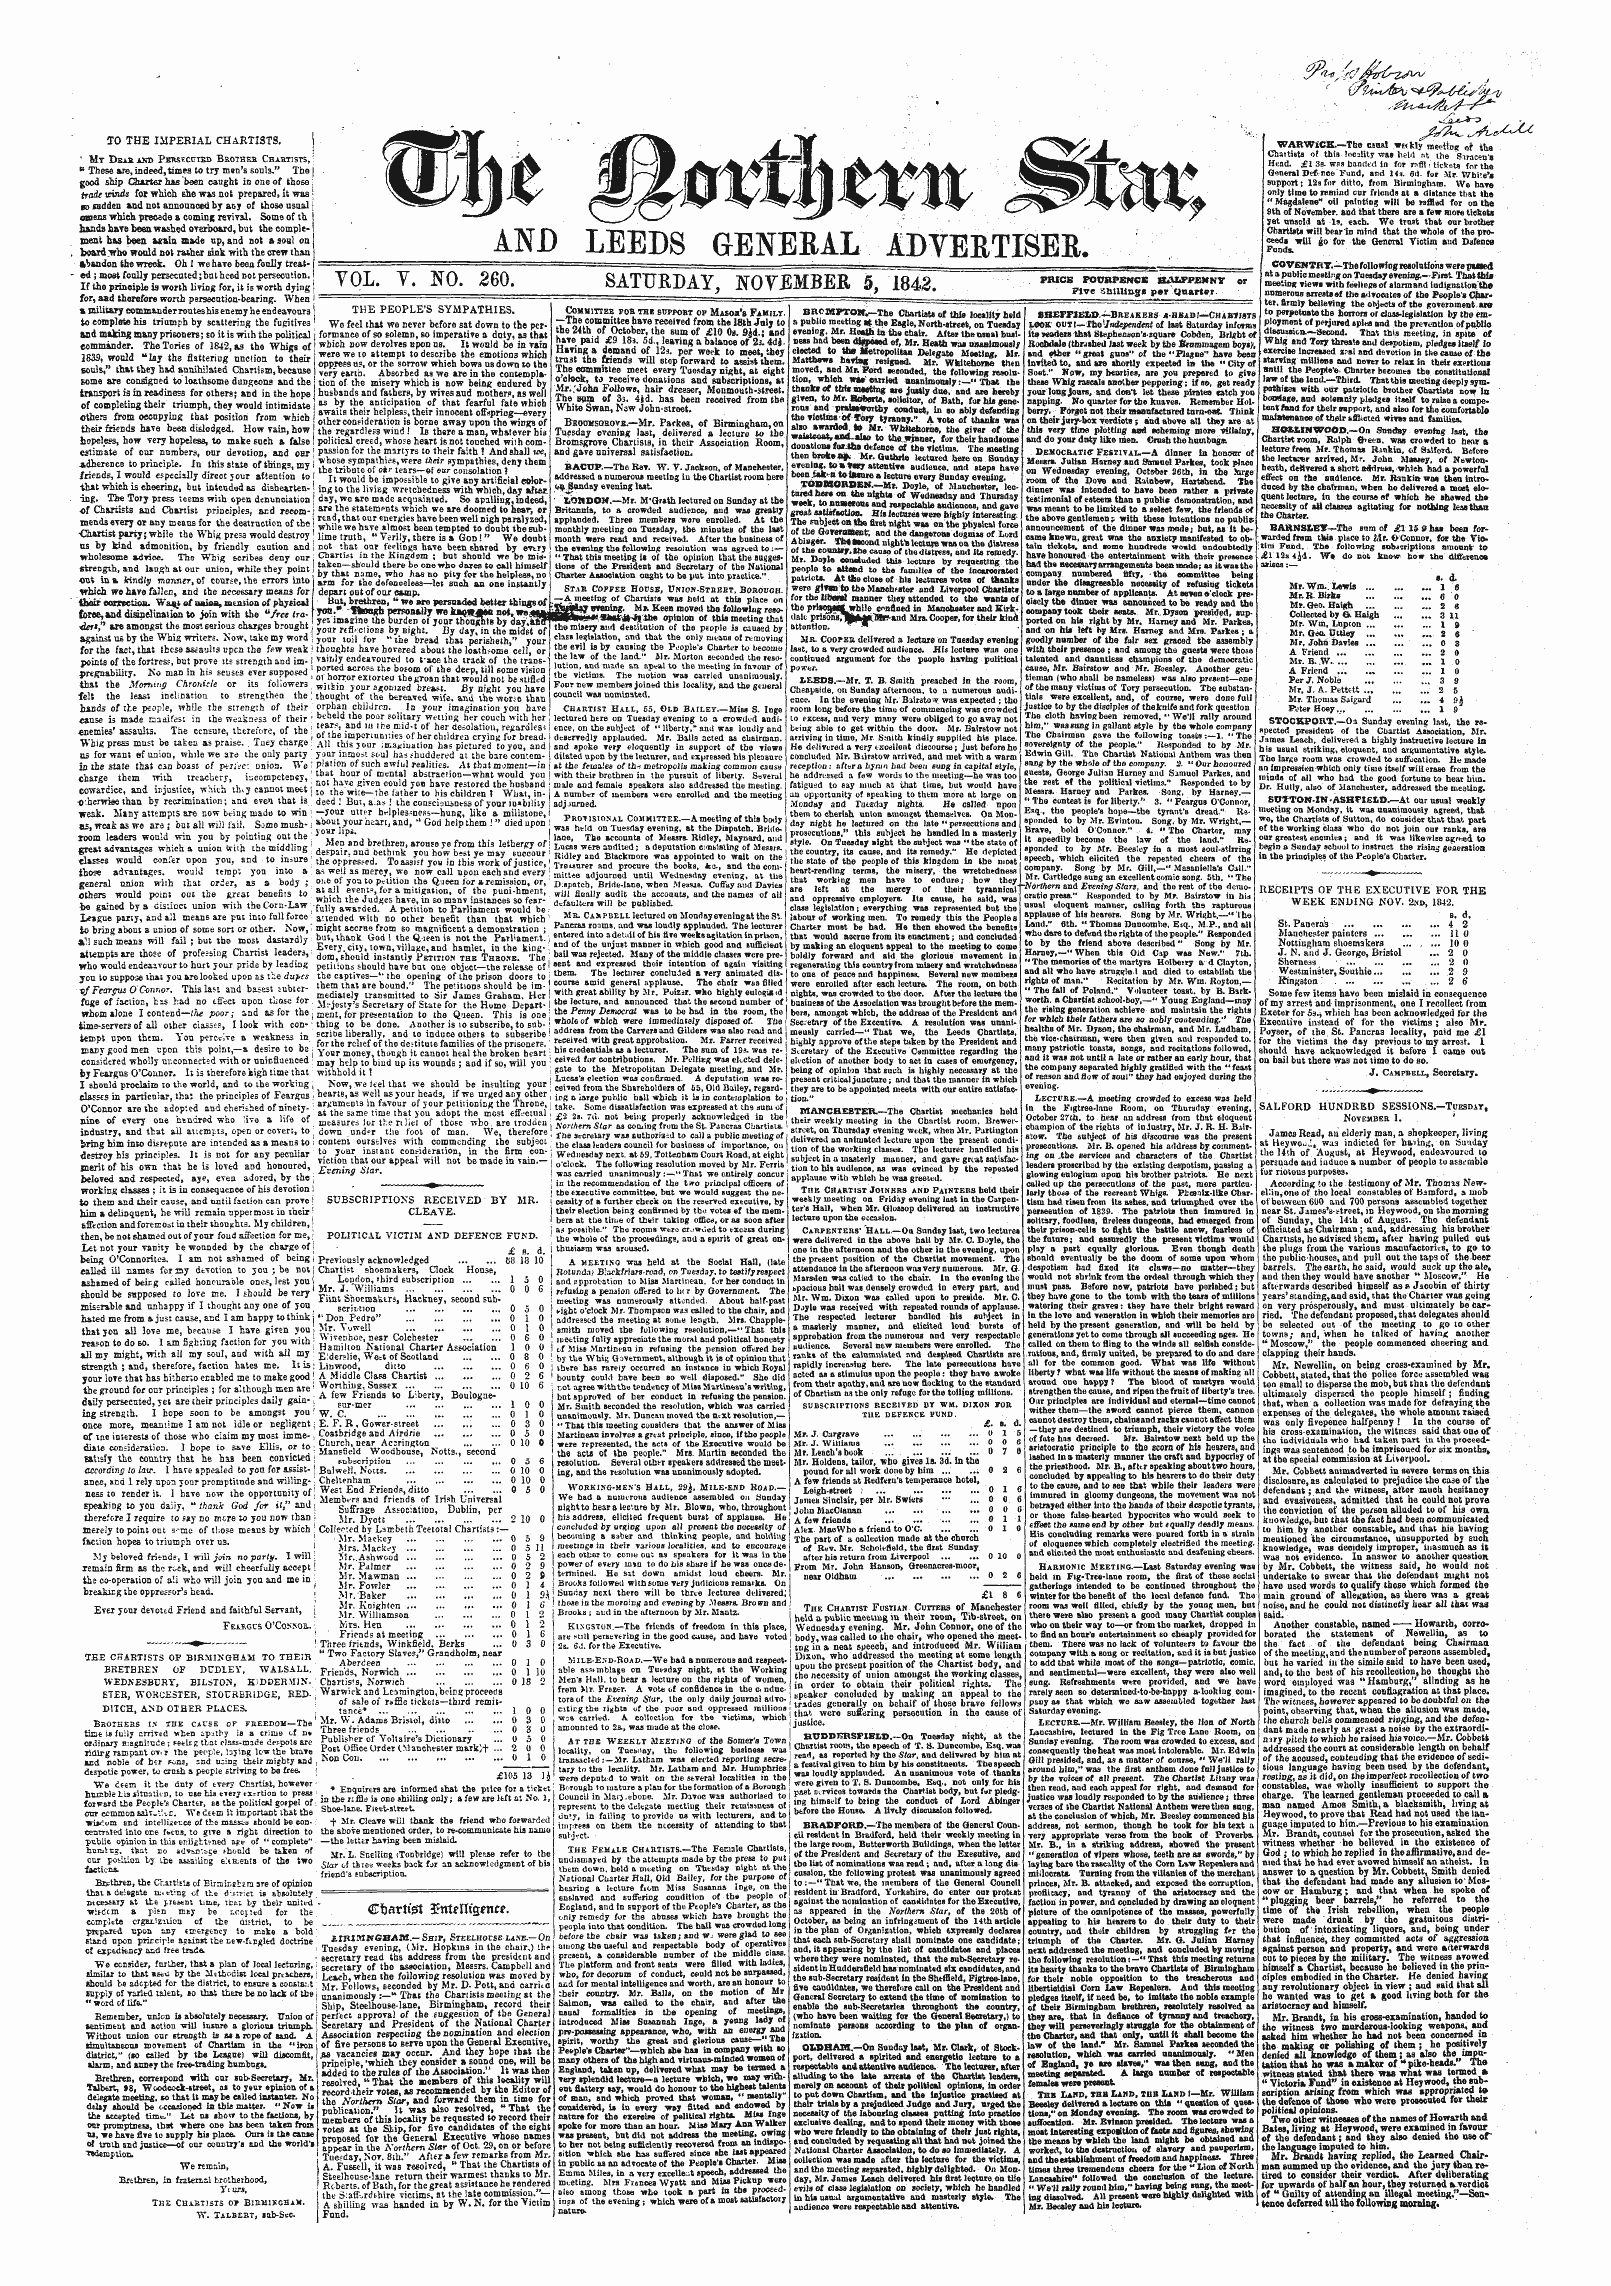 Northern Star (1837-1852): jS F Y, 5th edition - Ctiarttgt %Xttell\Qence.